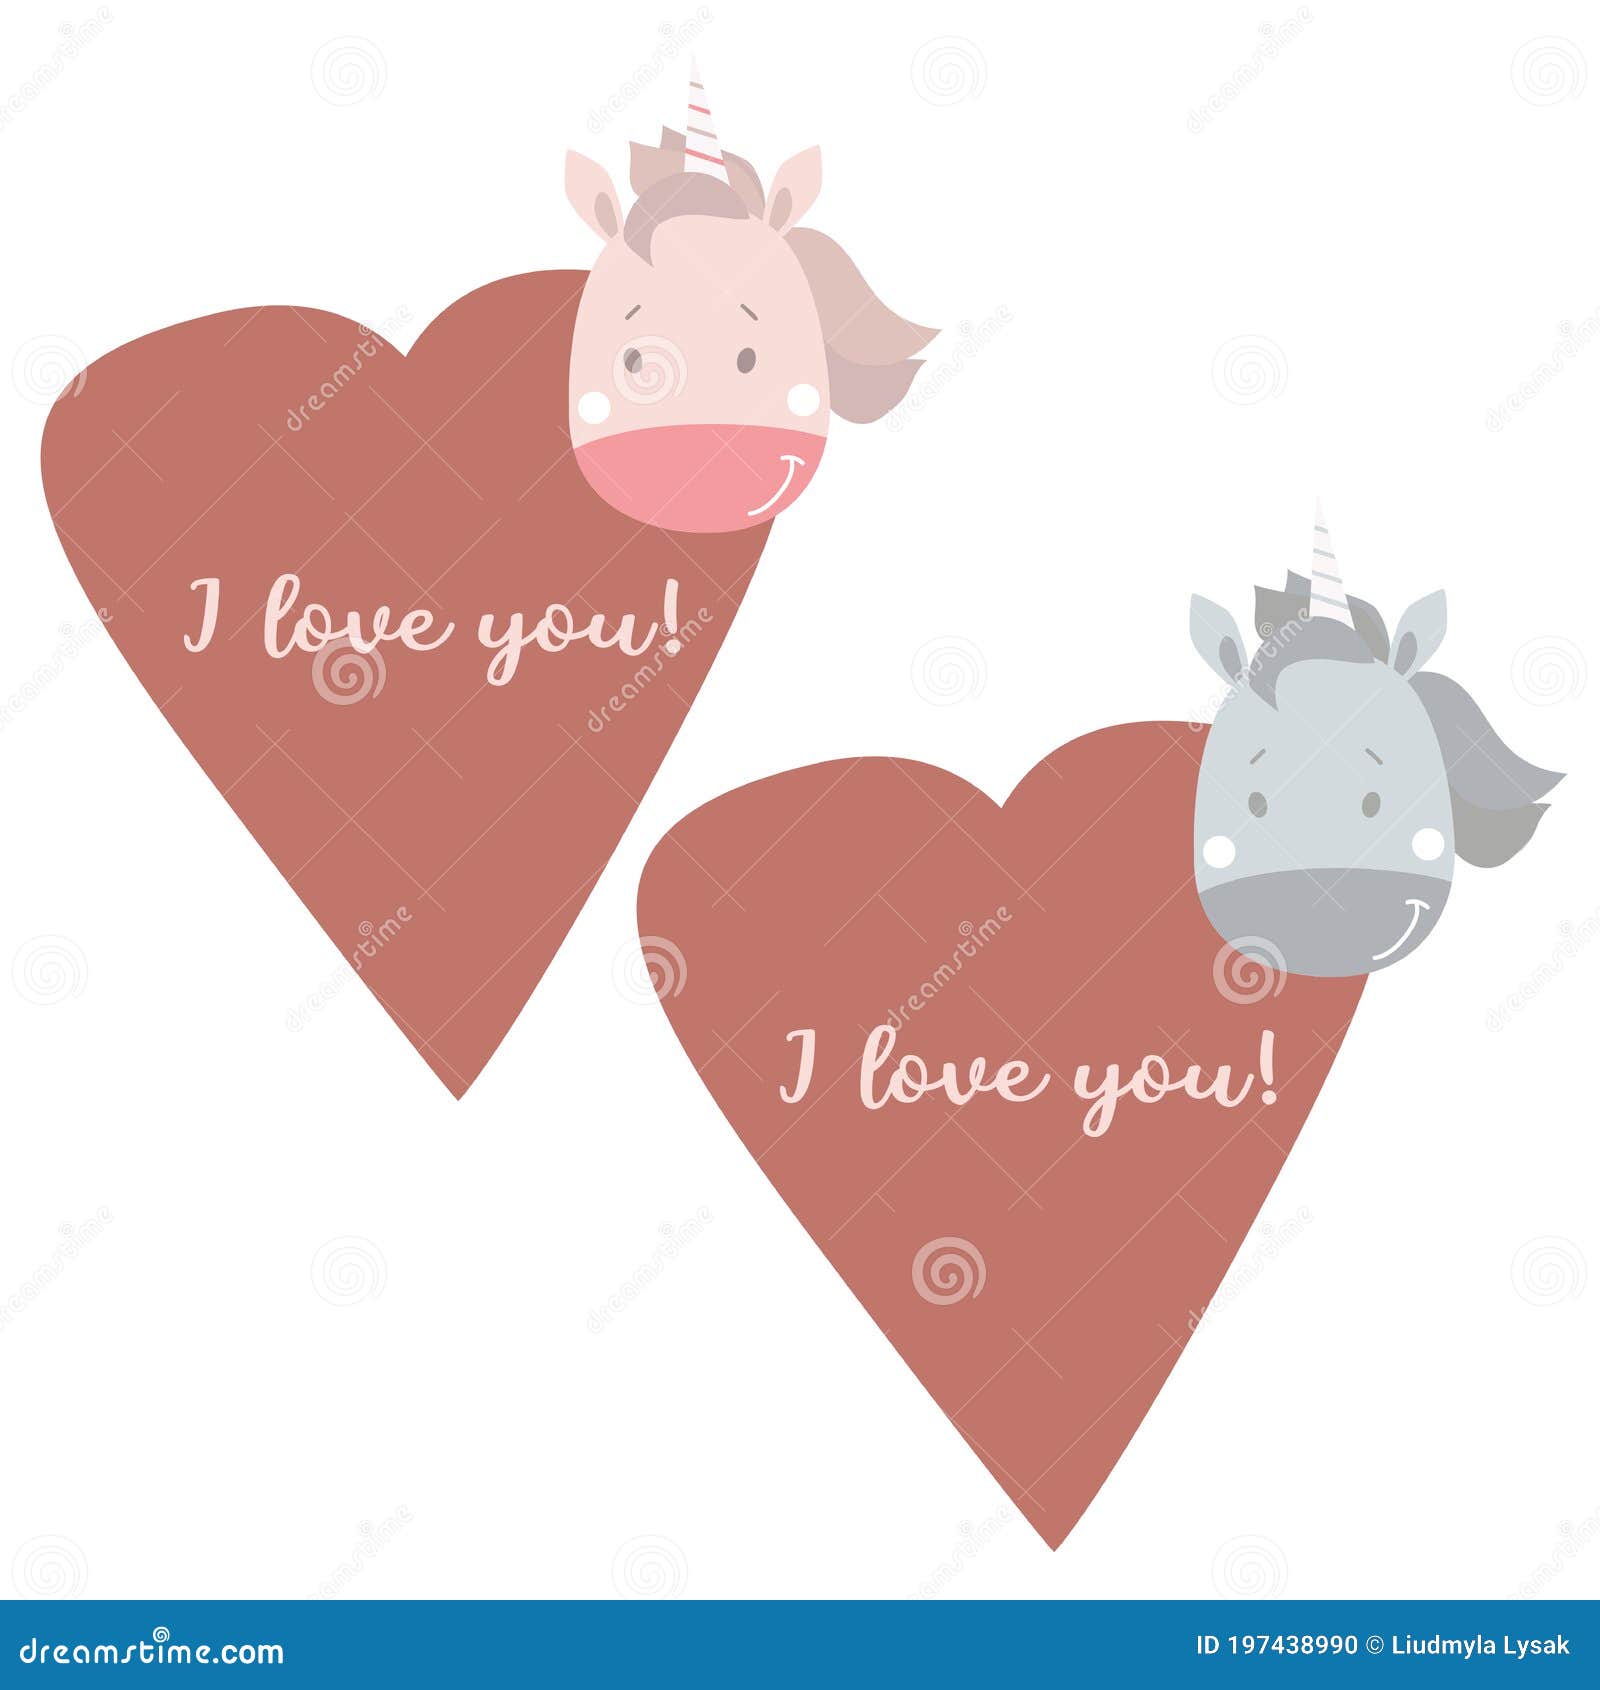 https://thumbs.dreamstime.com/z/postcard-declaration-love-cute-shy-unicorns-boy-girl-heart-phrase-i-you-vector-illustration-scandinavian-design-197438990.jpg